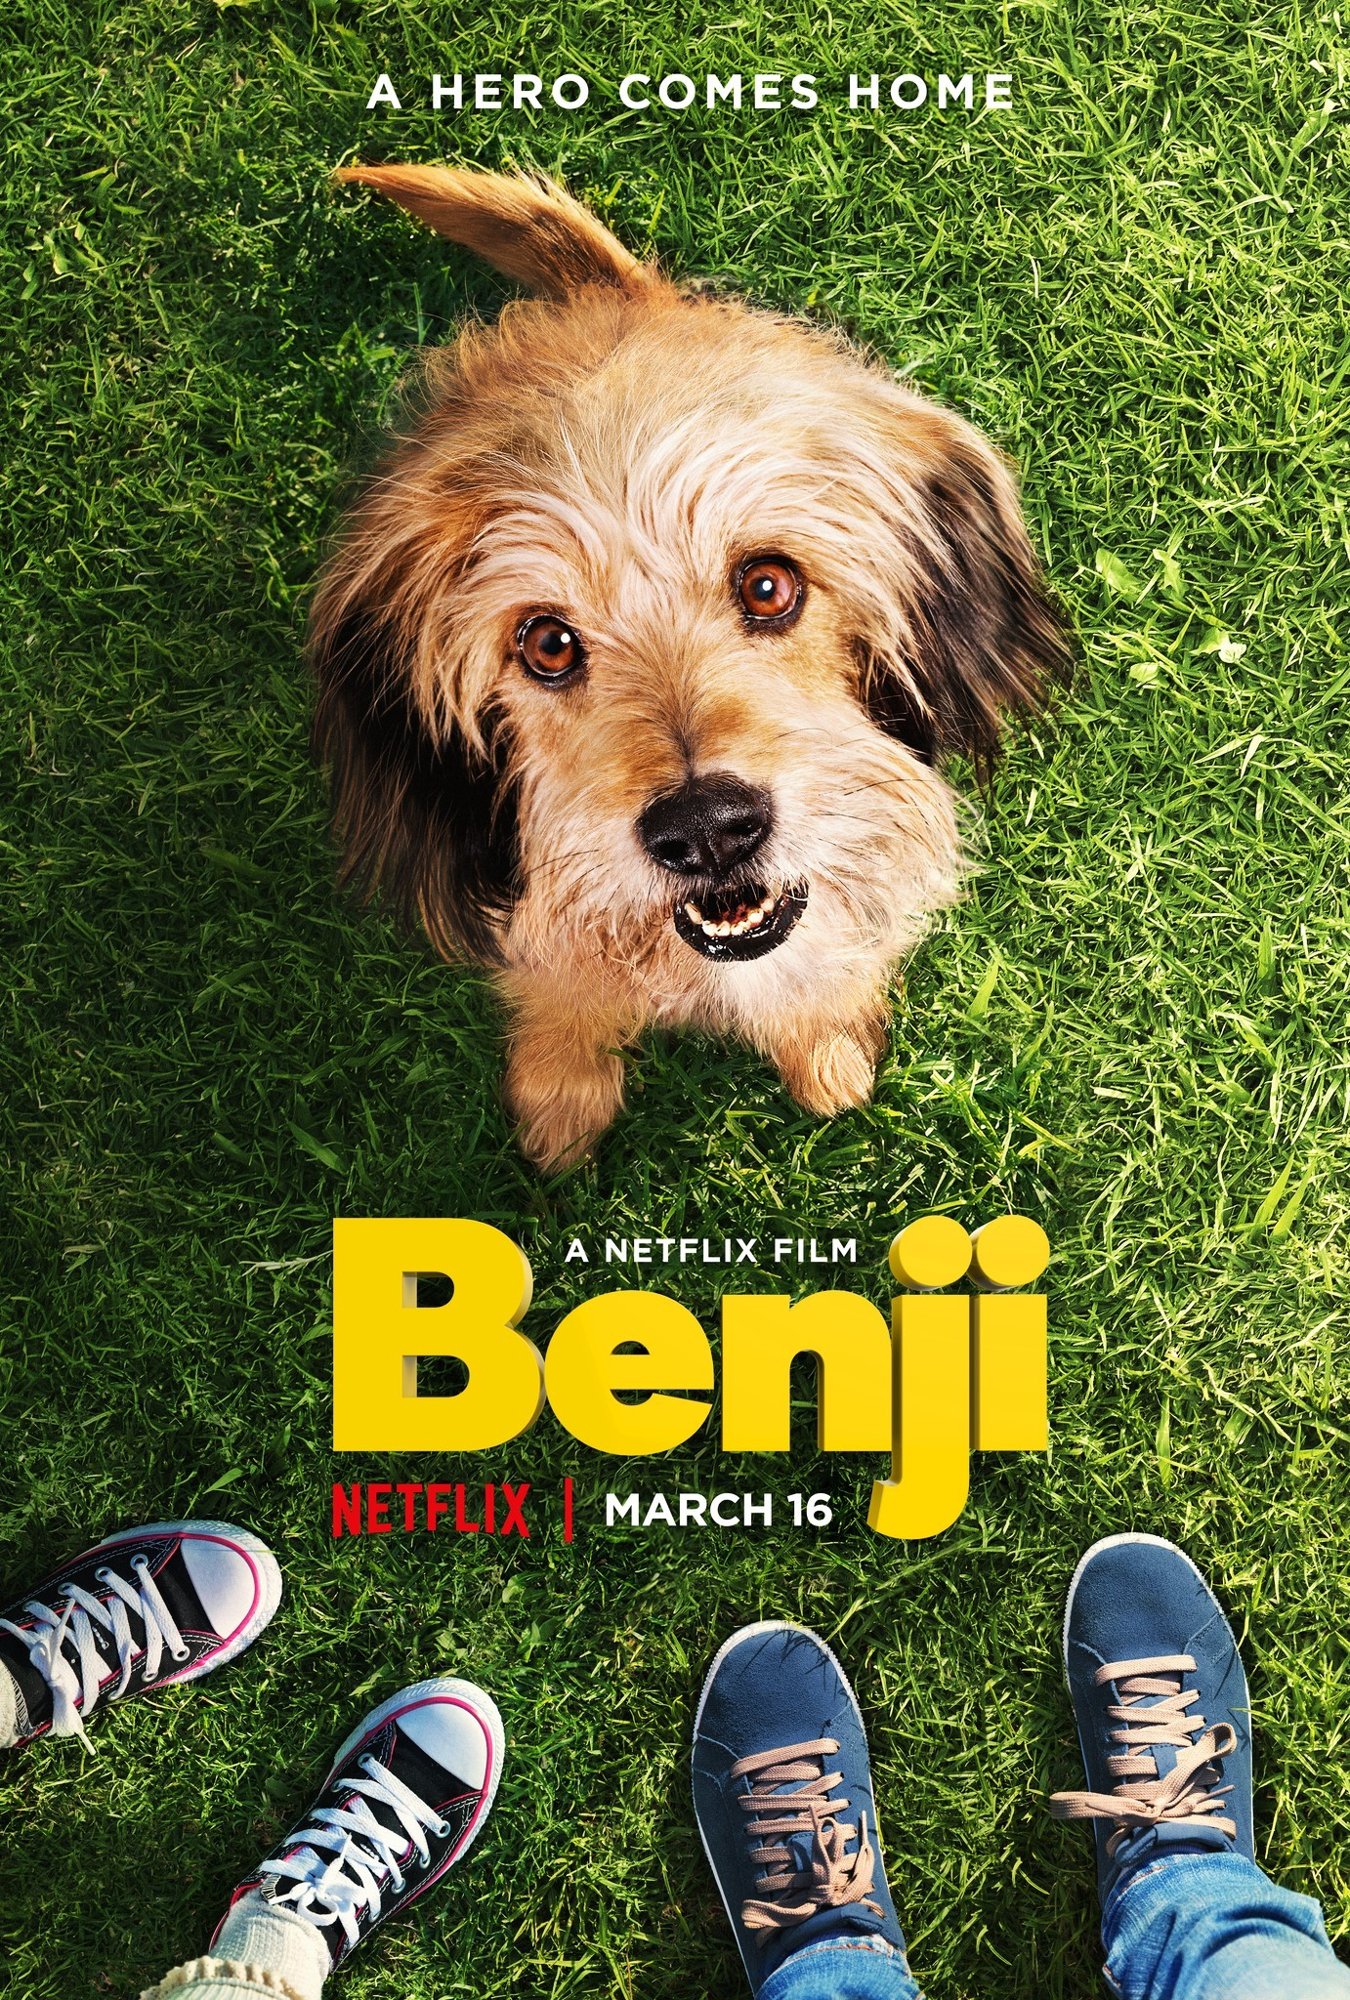 Poster of Netflix's Benji (2018)